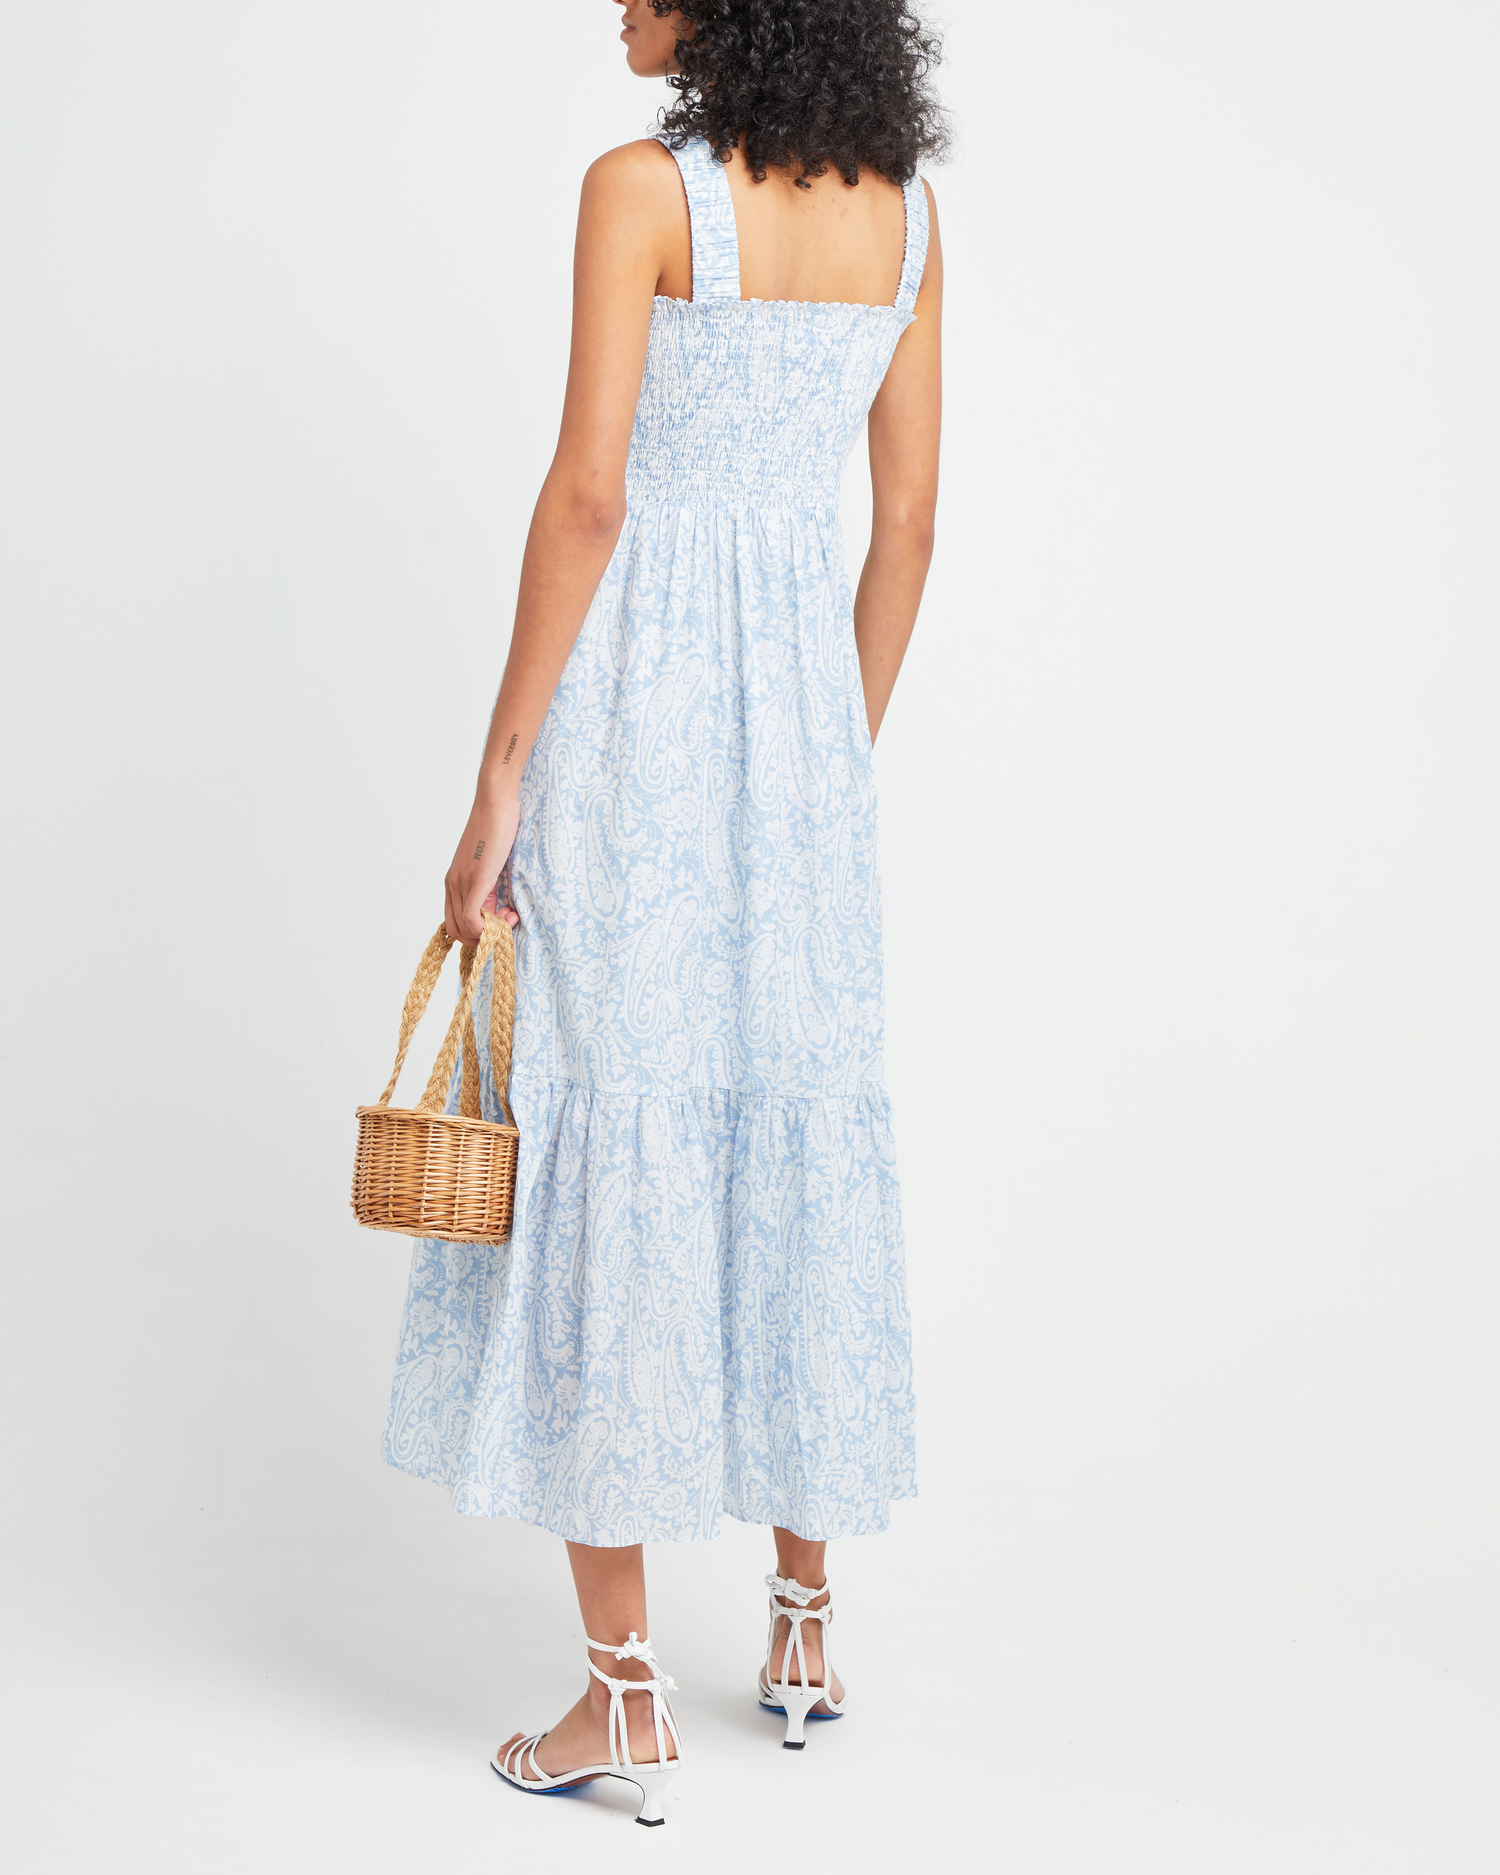 Second image of Cotton Isla Dress, a blue midi dress, smocked, square neckline, tiered skirt